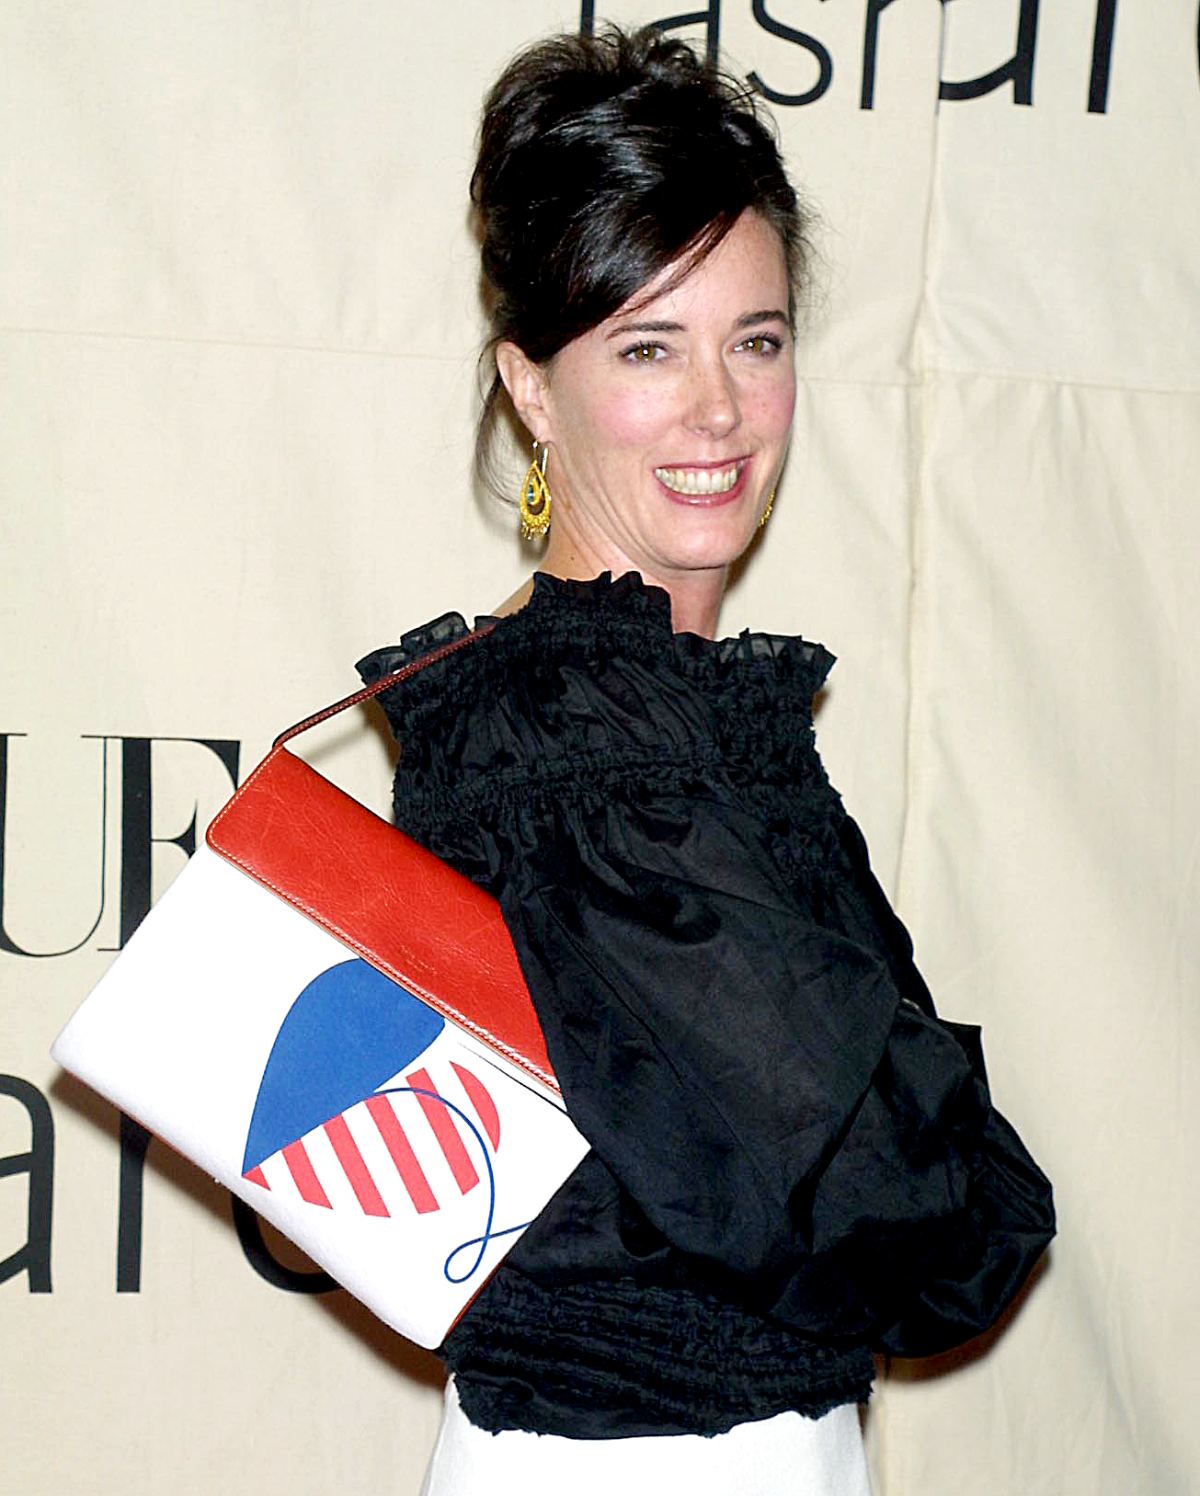 My 'First Grown-up' Handbag: Kate Spade Fans React - The New York